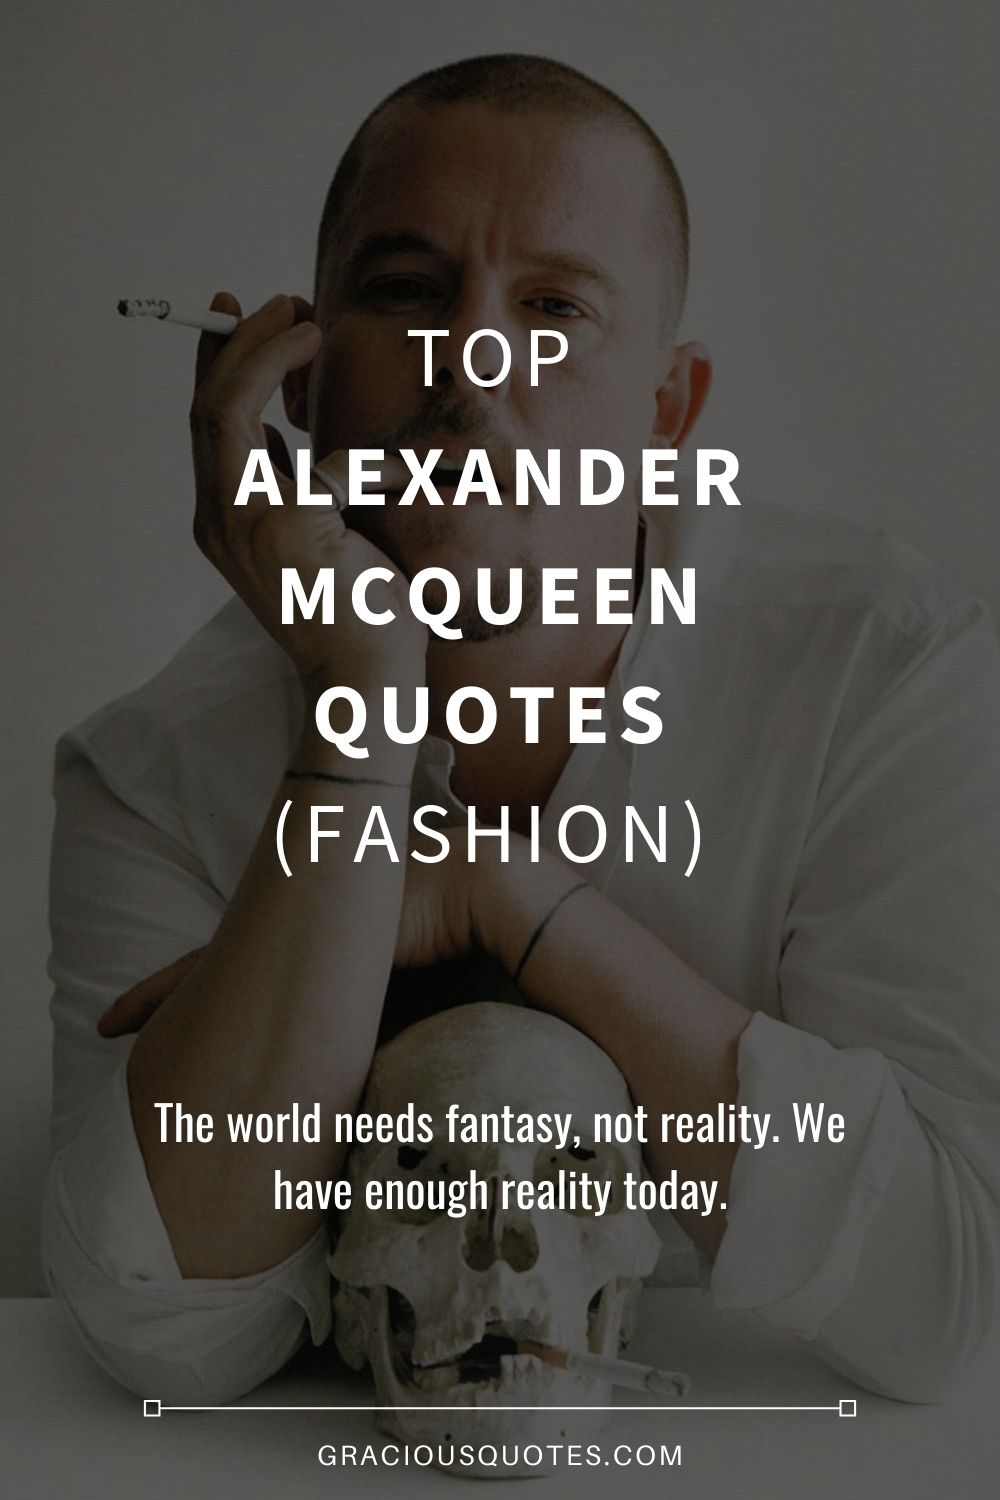 Top Alexander McQueen Quotes (FASHION) - Gracious Quotes